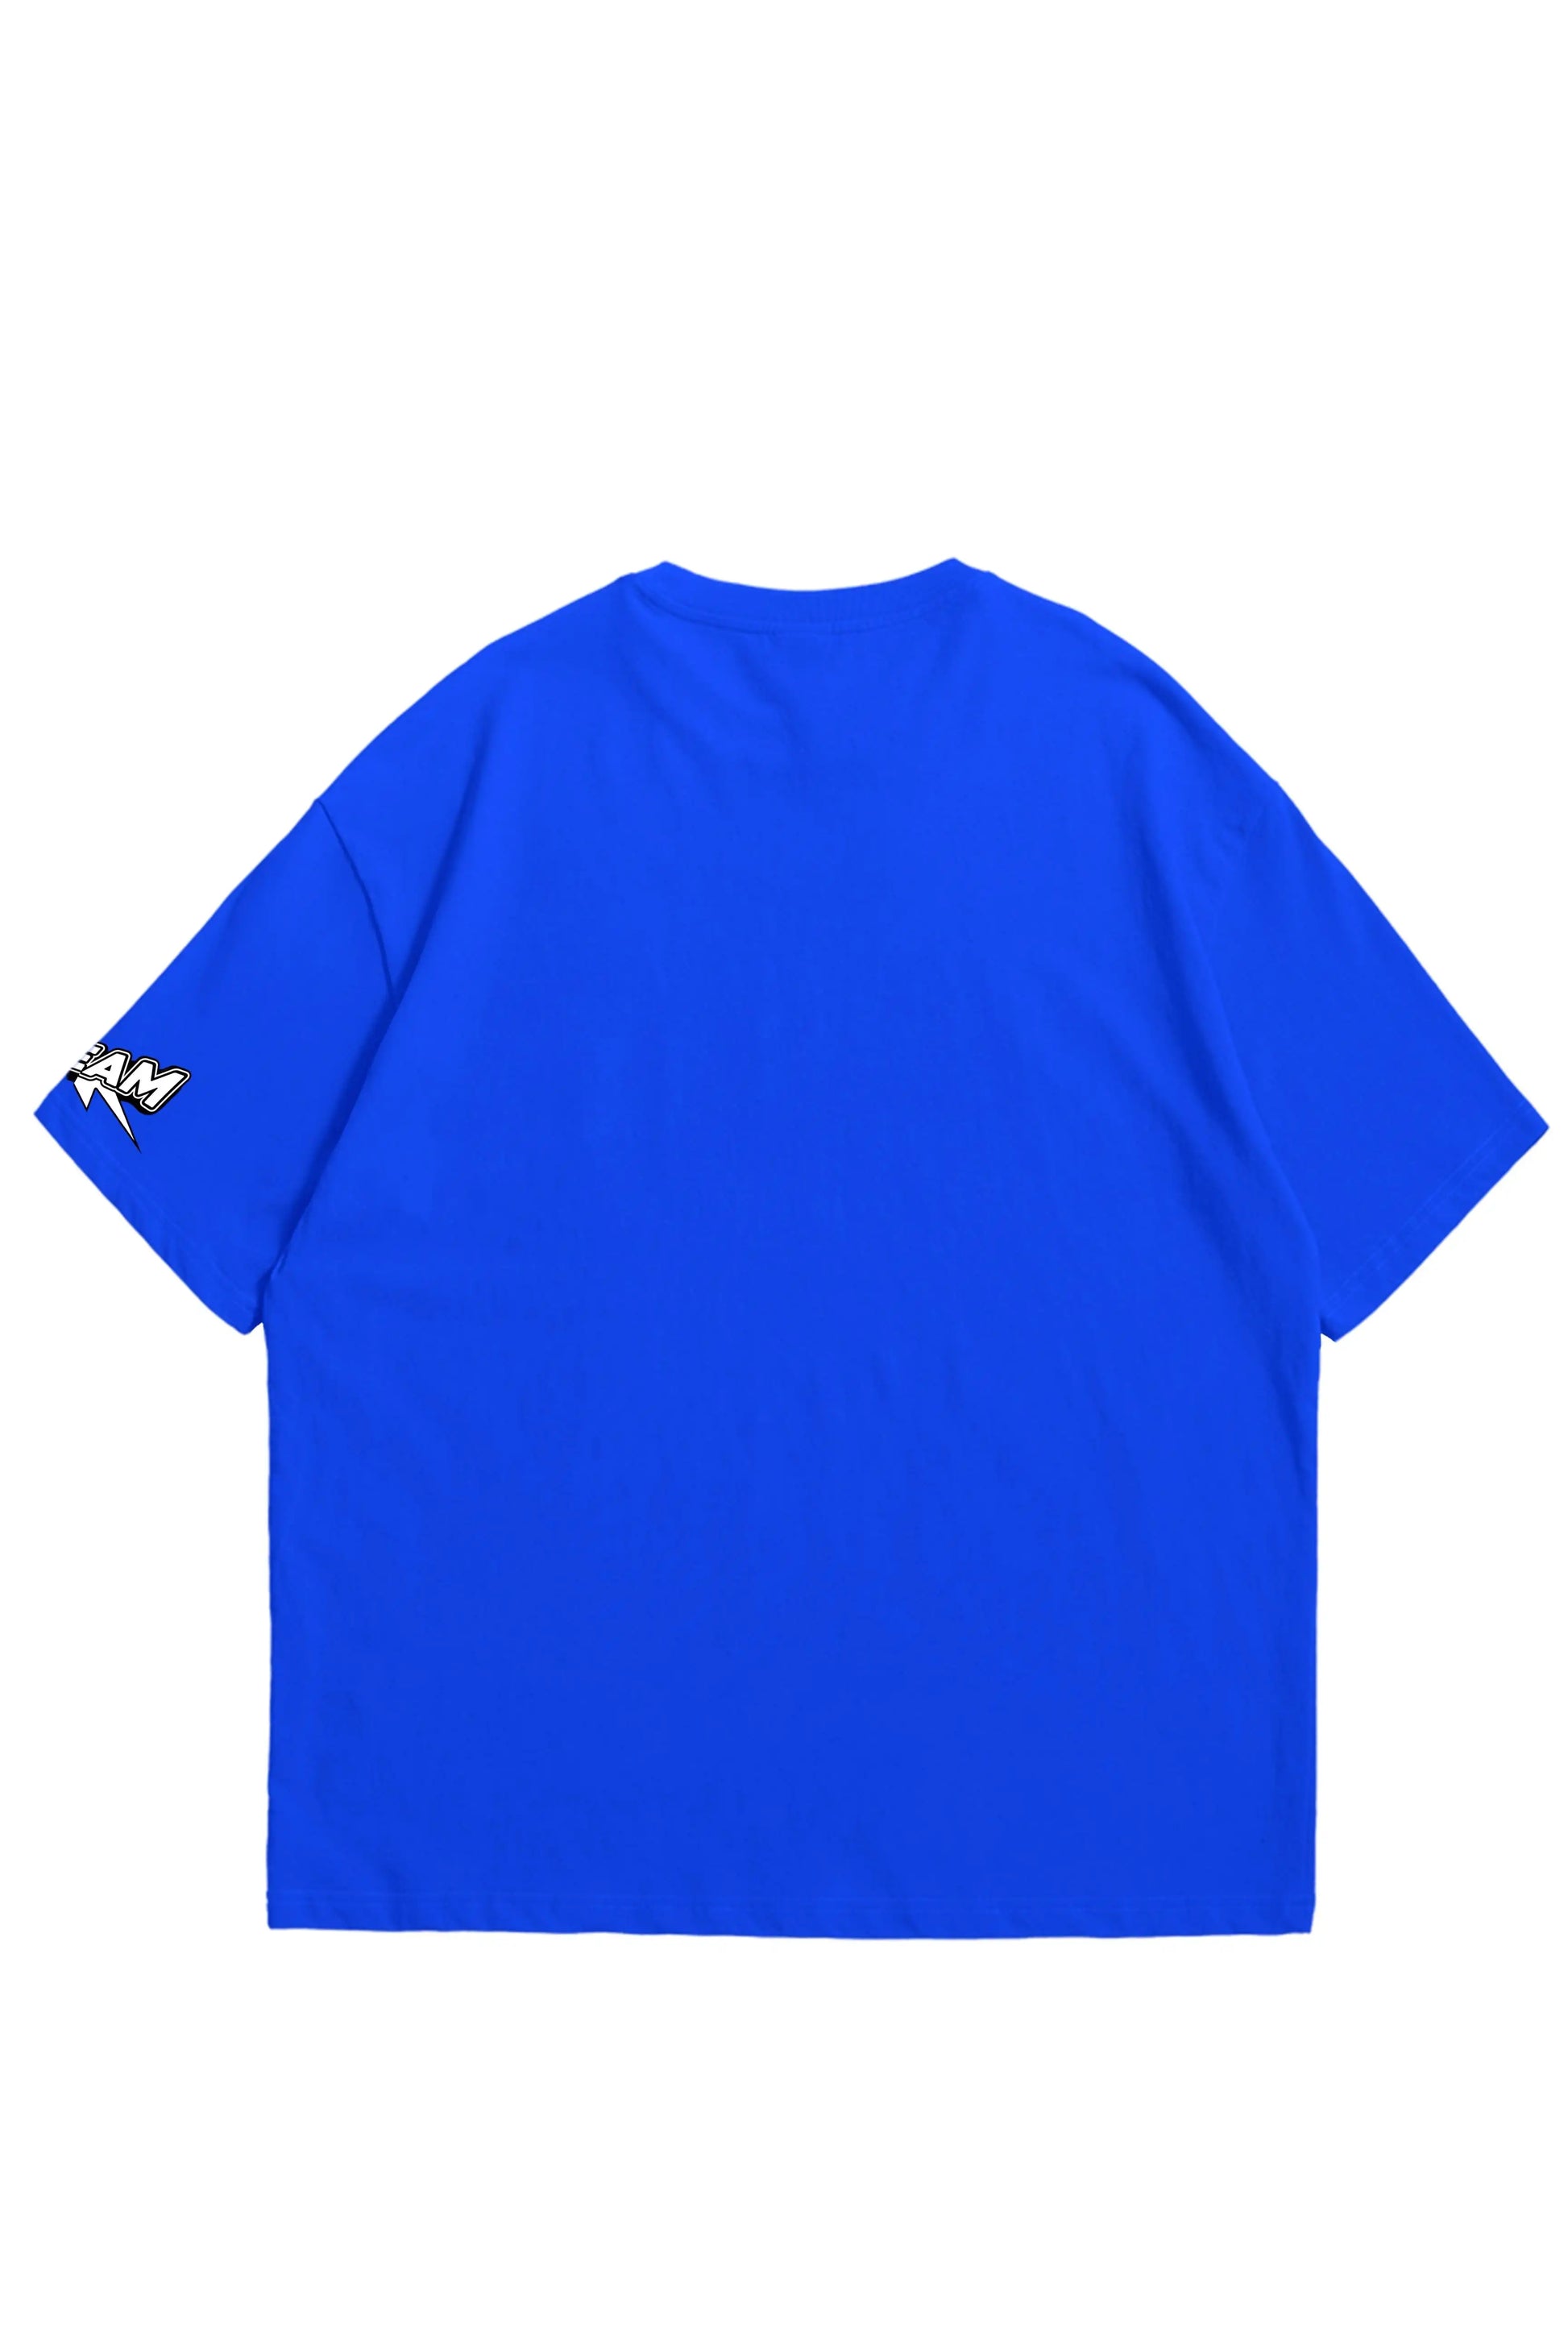 blue oversized t-shirt, graphic y2k print, skream streetwear t-shirt